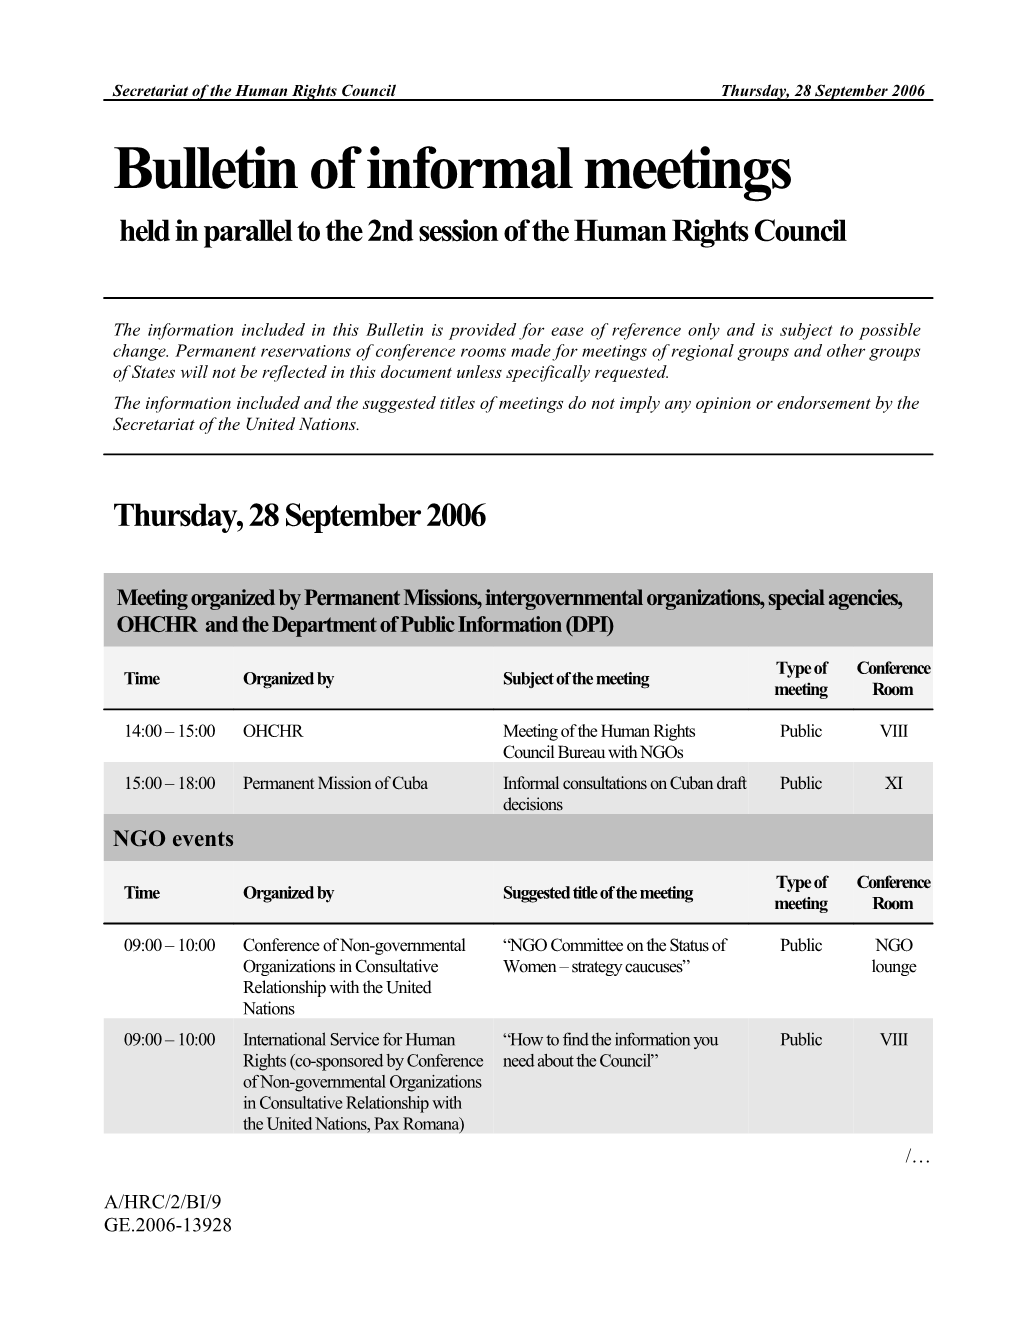 NGO Events, Thursday, 28 September 2006 (Cont D)